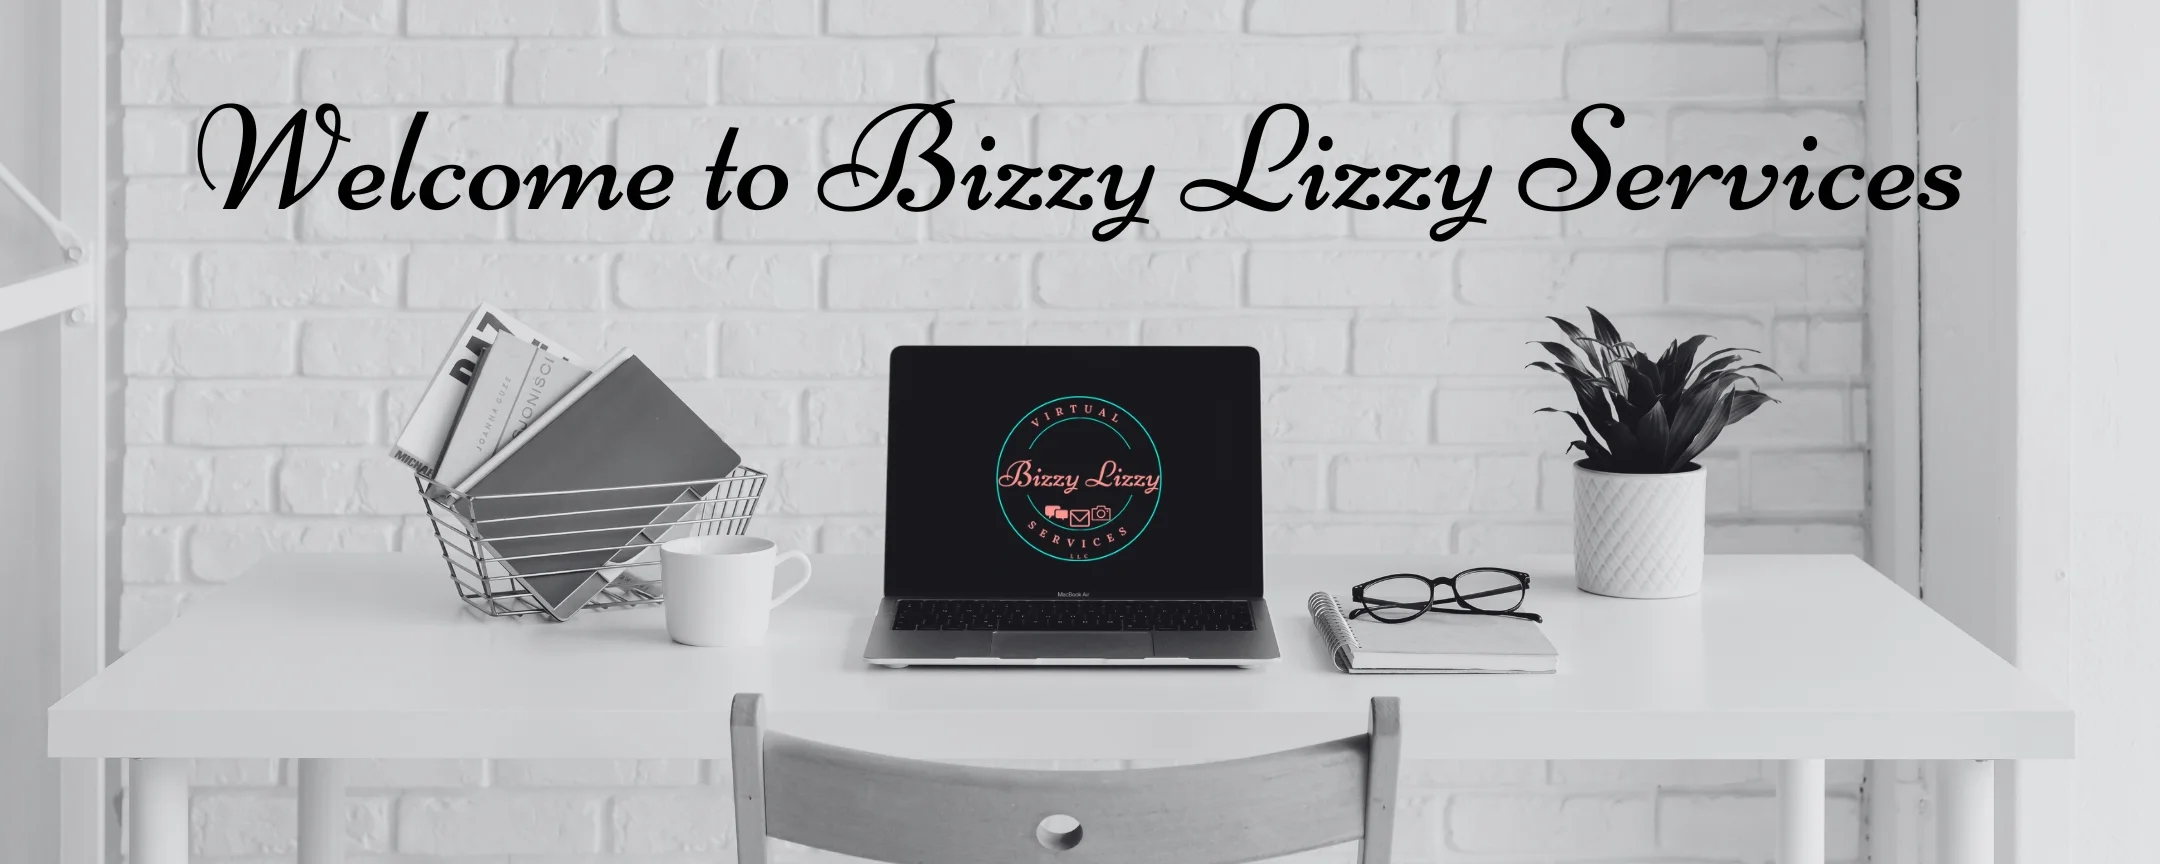 Bizzy Lizzy Services Desk